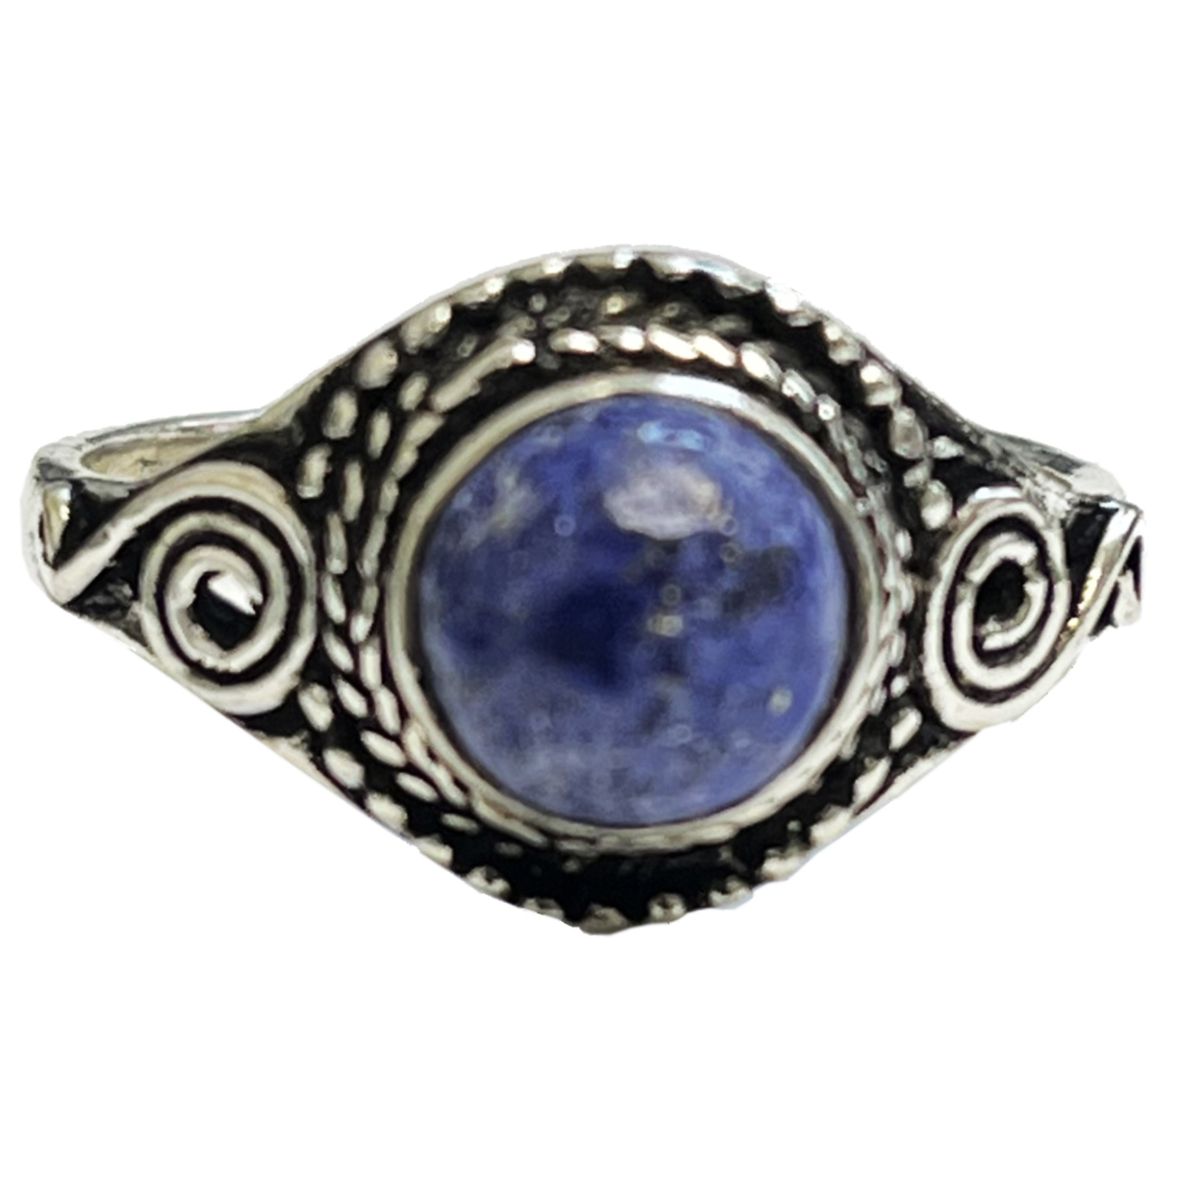 Brass and Lapis lazuli adjustable ring